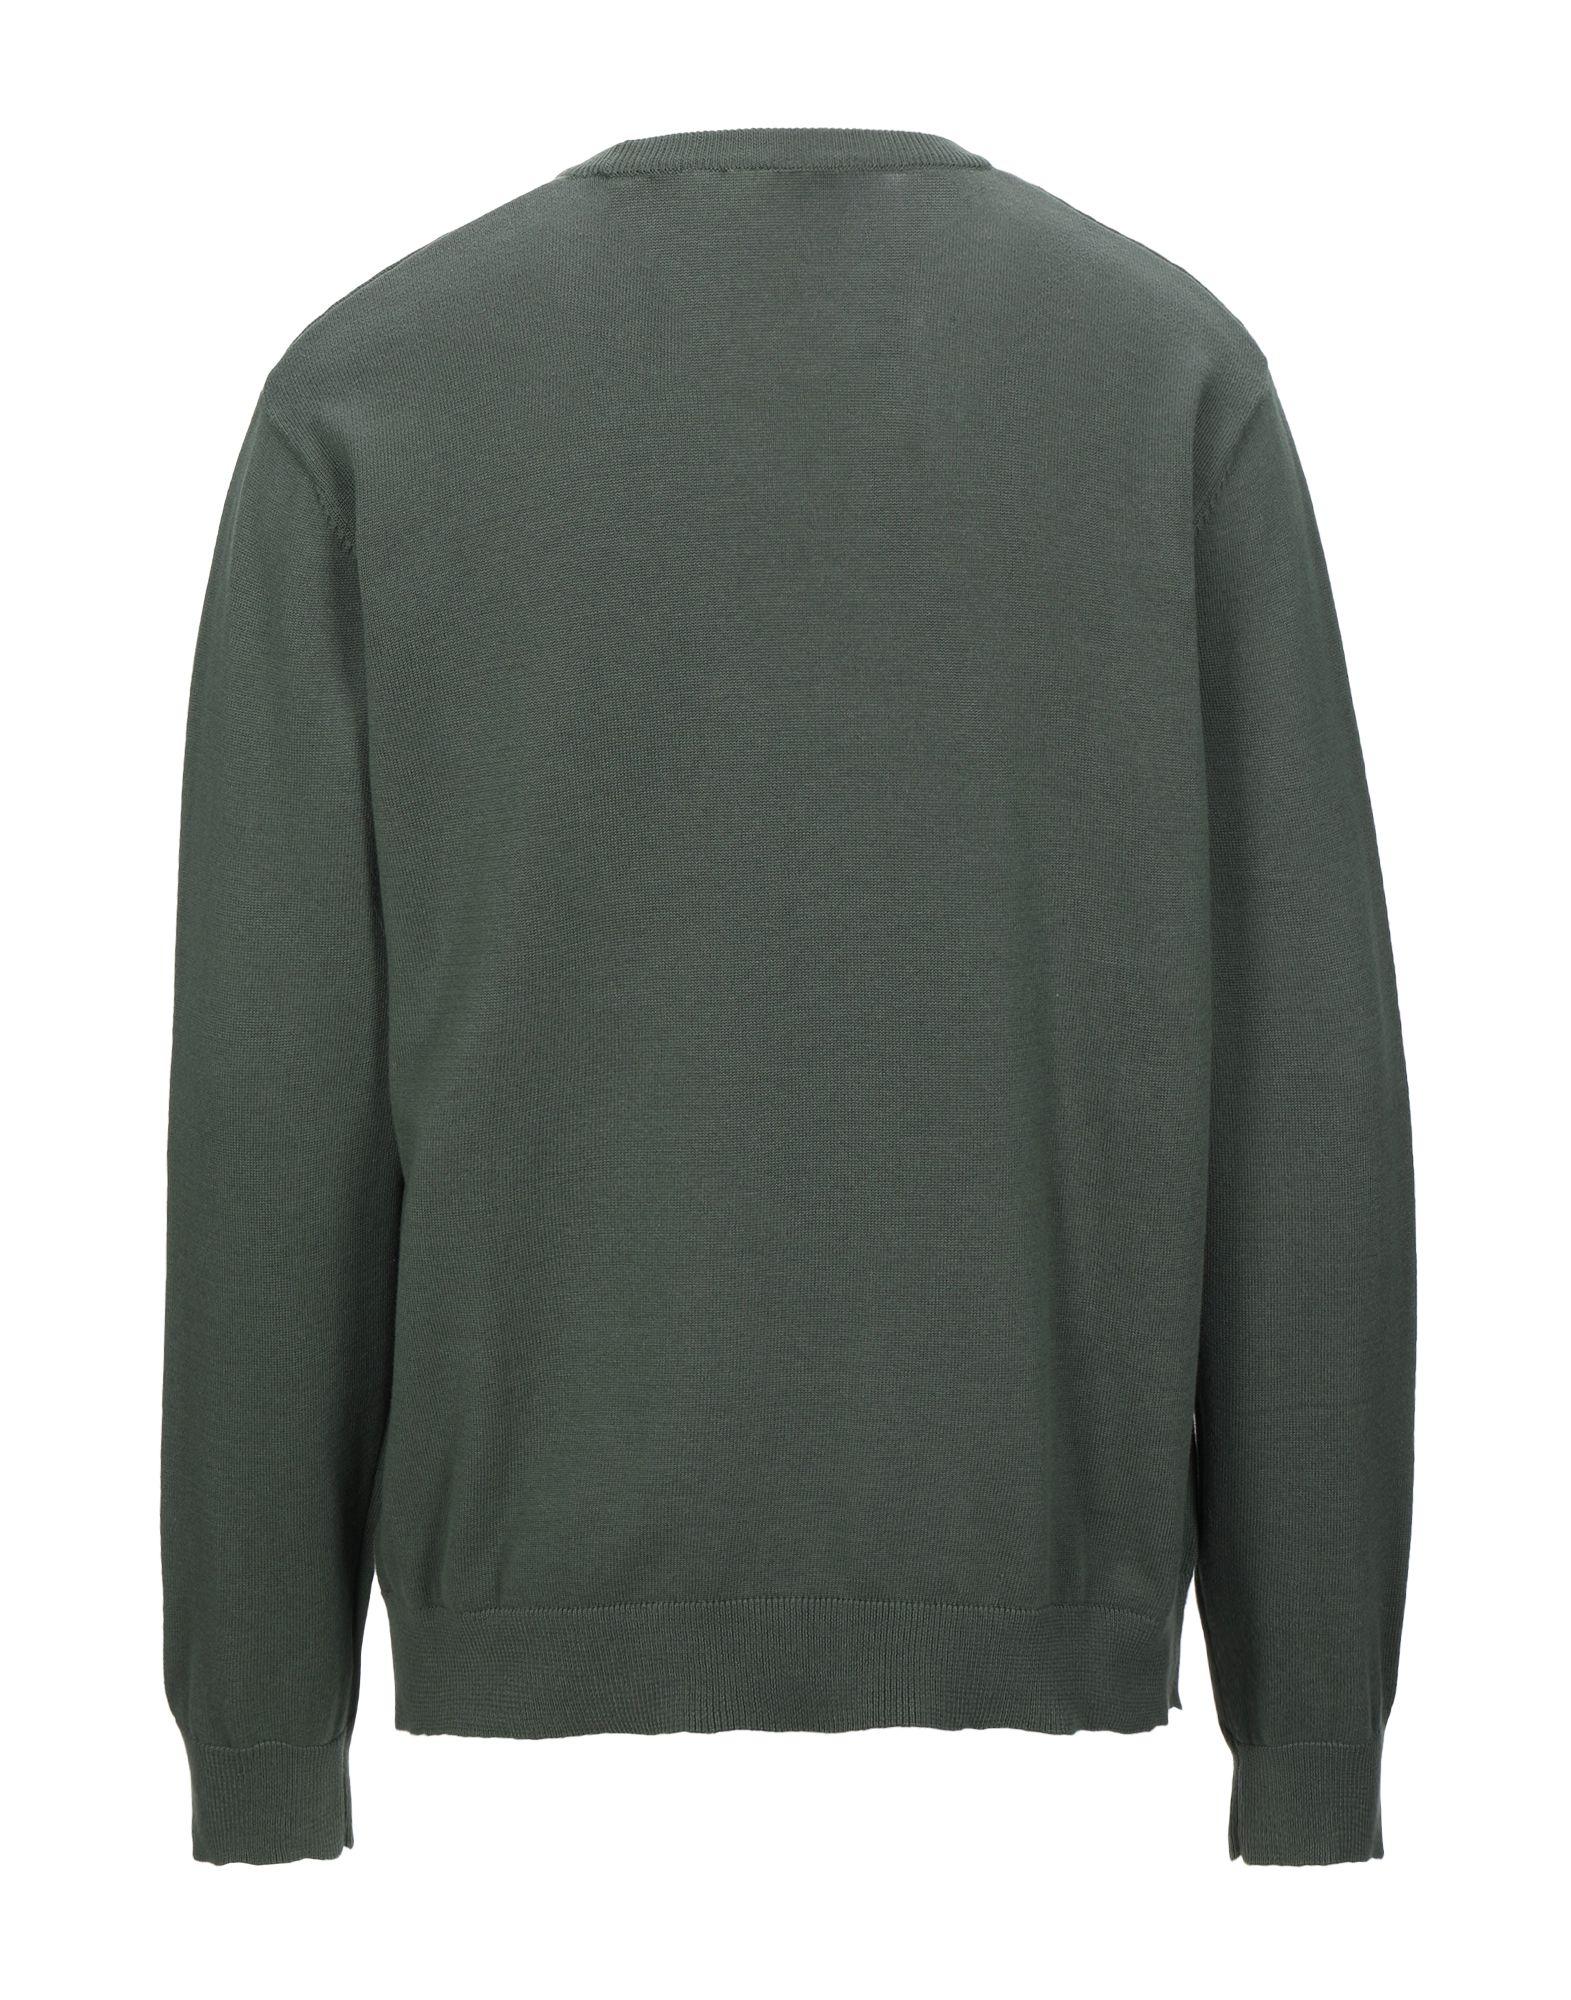 Carhartt Cotton Sweater in Green for Men - Lyst